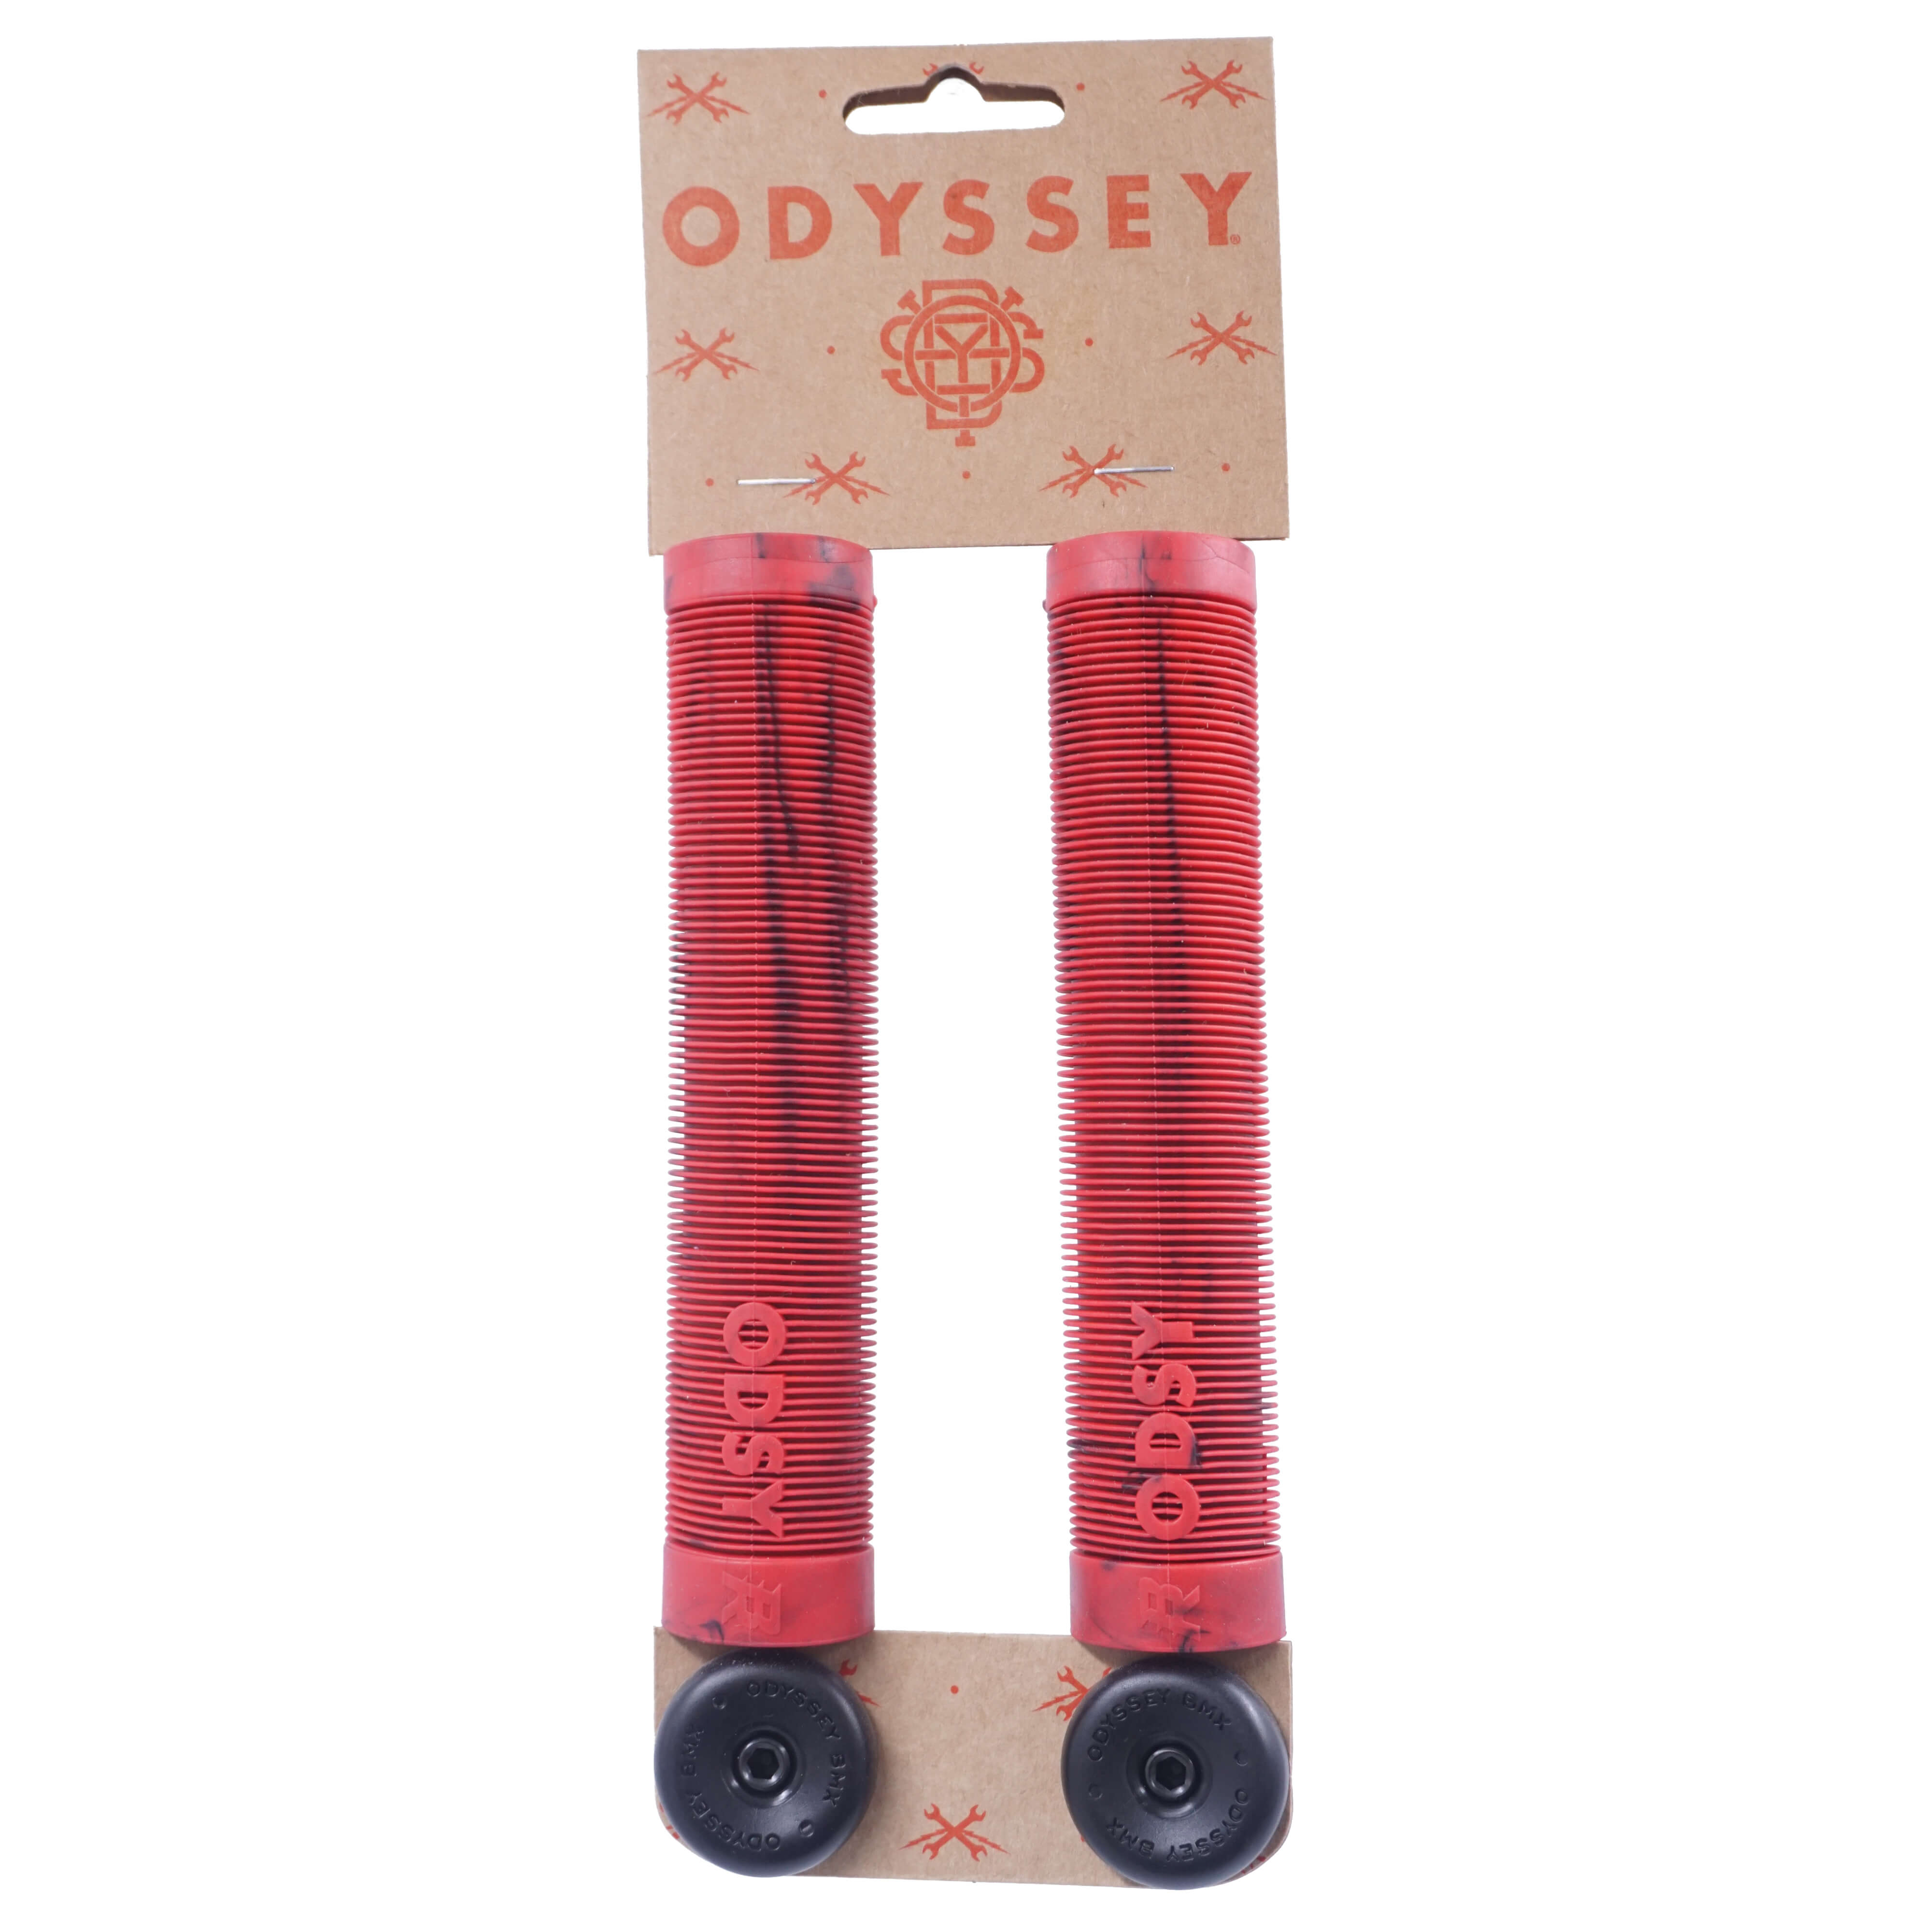 Odyssey Broc Raiford MX Grips